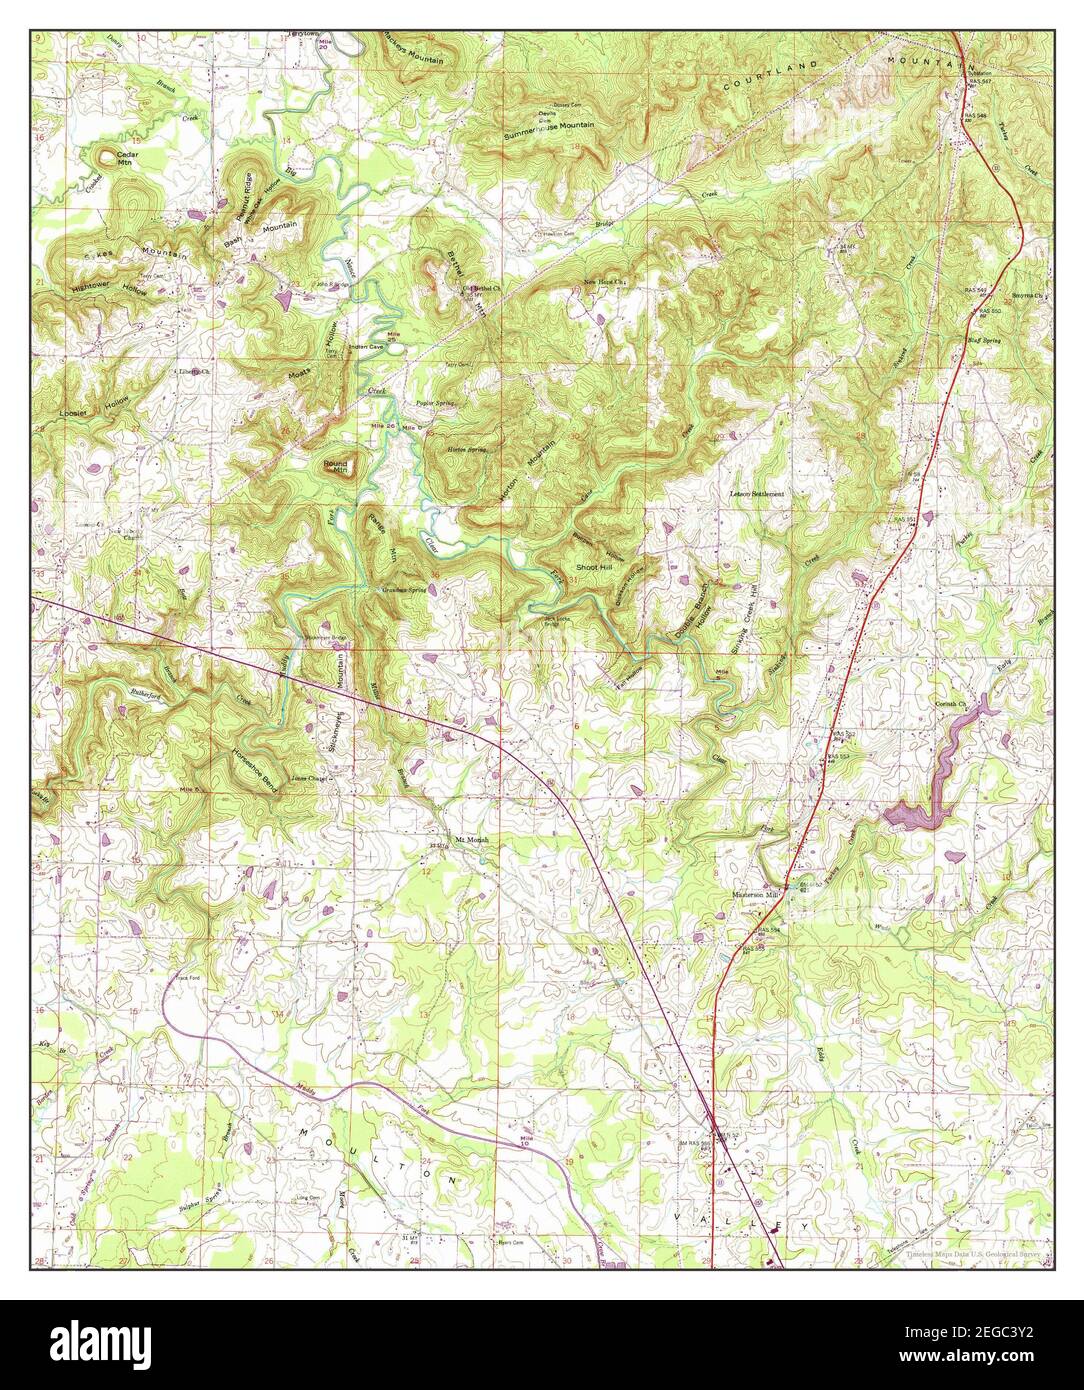 Masterson, Alabama, map 1948, 1:24000, United States of America by Timeless Maps, data U.S. Geological Survey Stock Photo